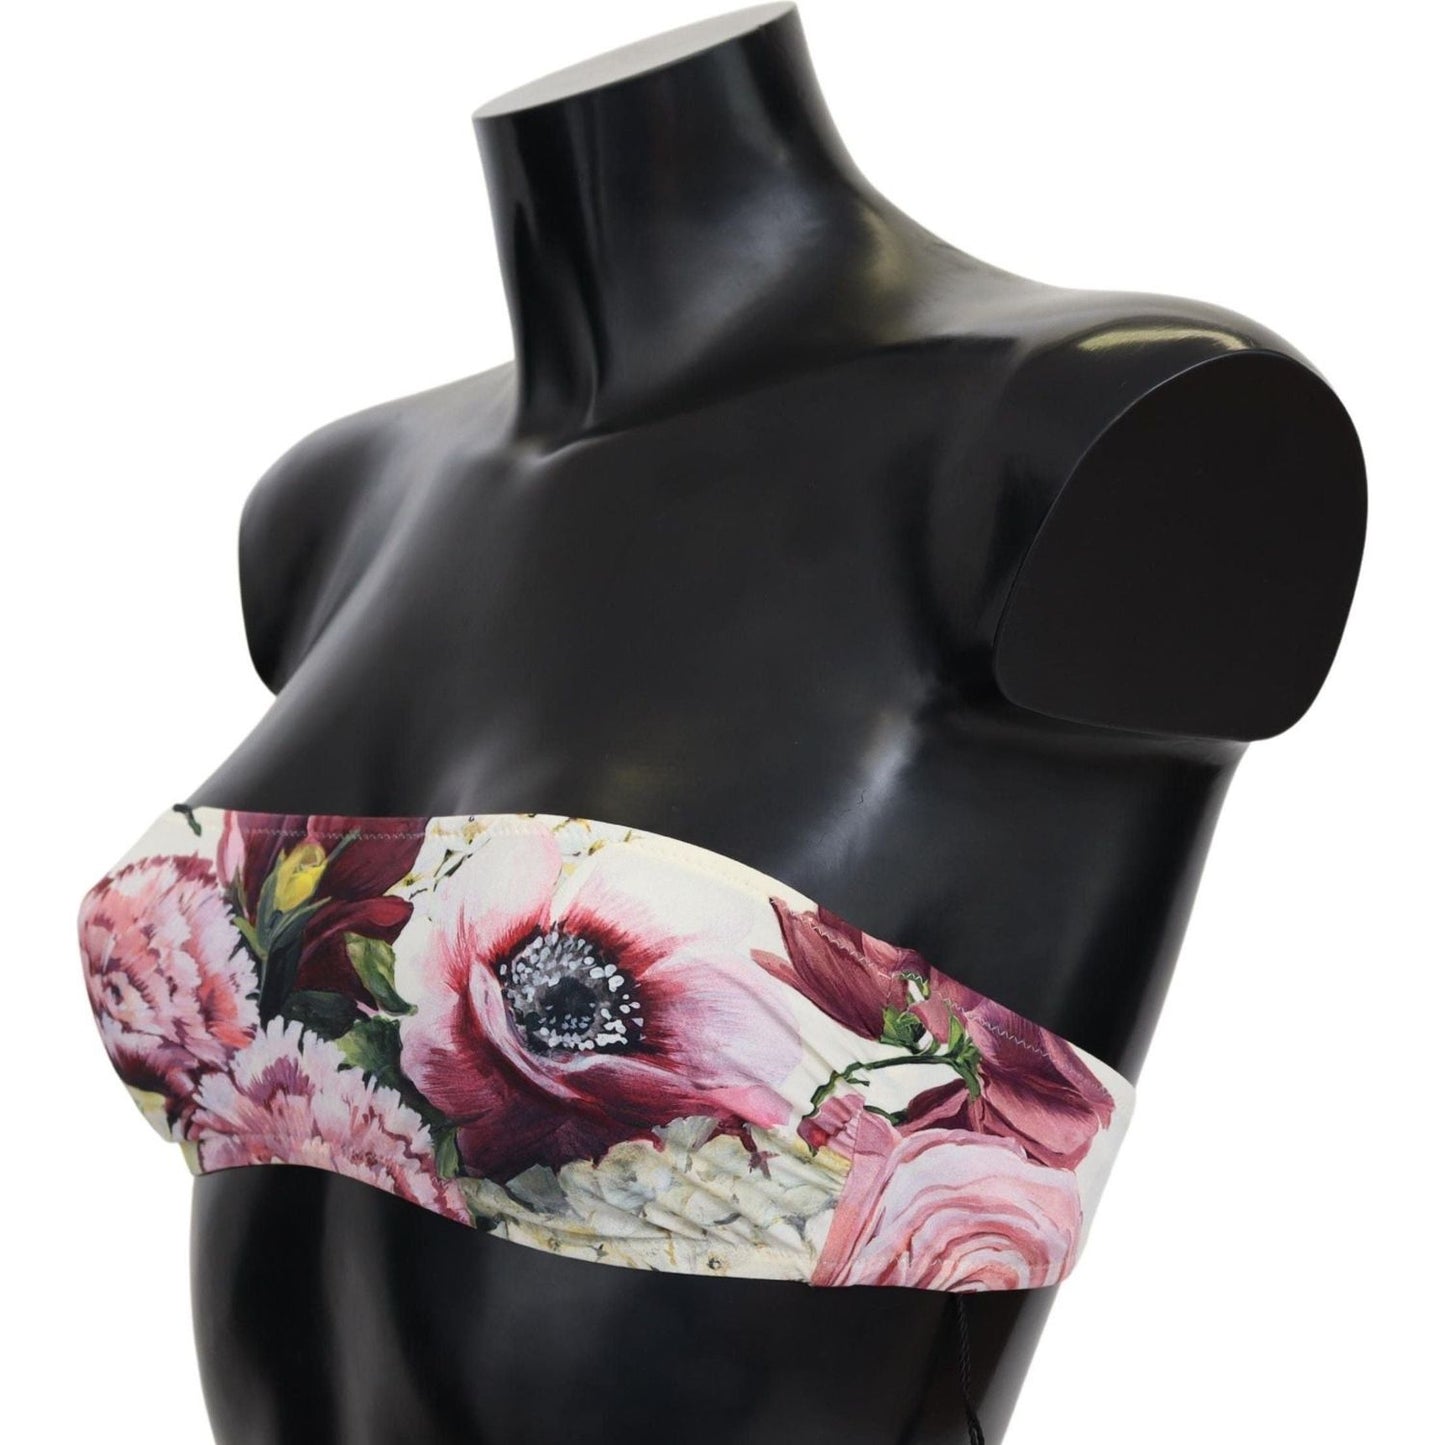 Dolce & Gabbana Multicolor Floral Bikini Top - Elegant Summer Wear multicolor-floral-print-women-beachwear-bikini-tops